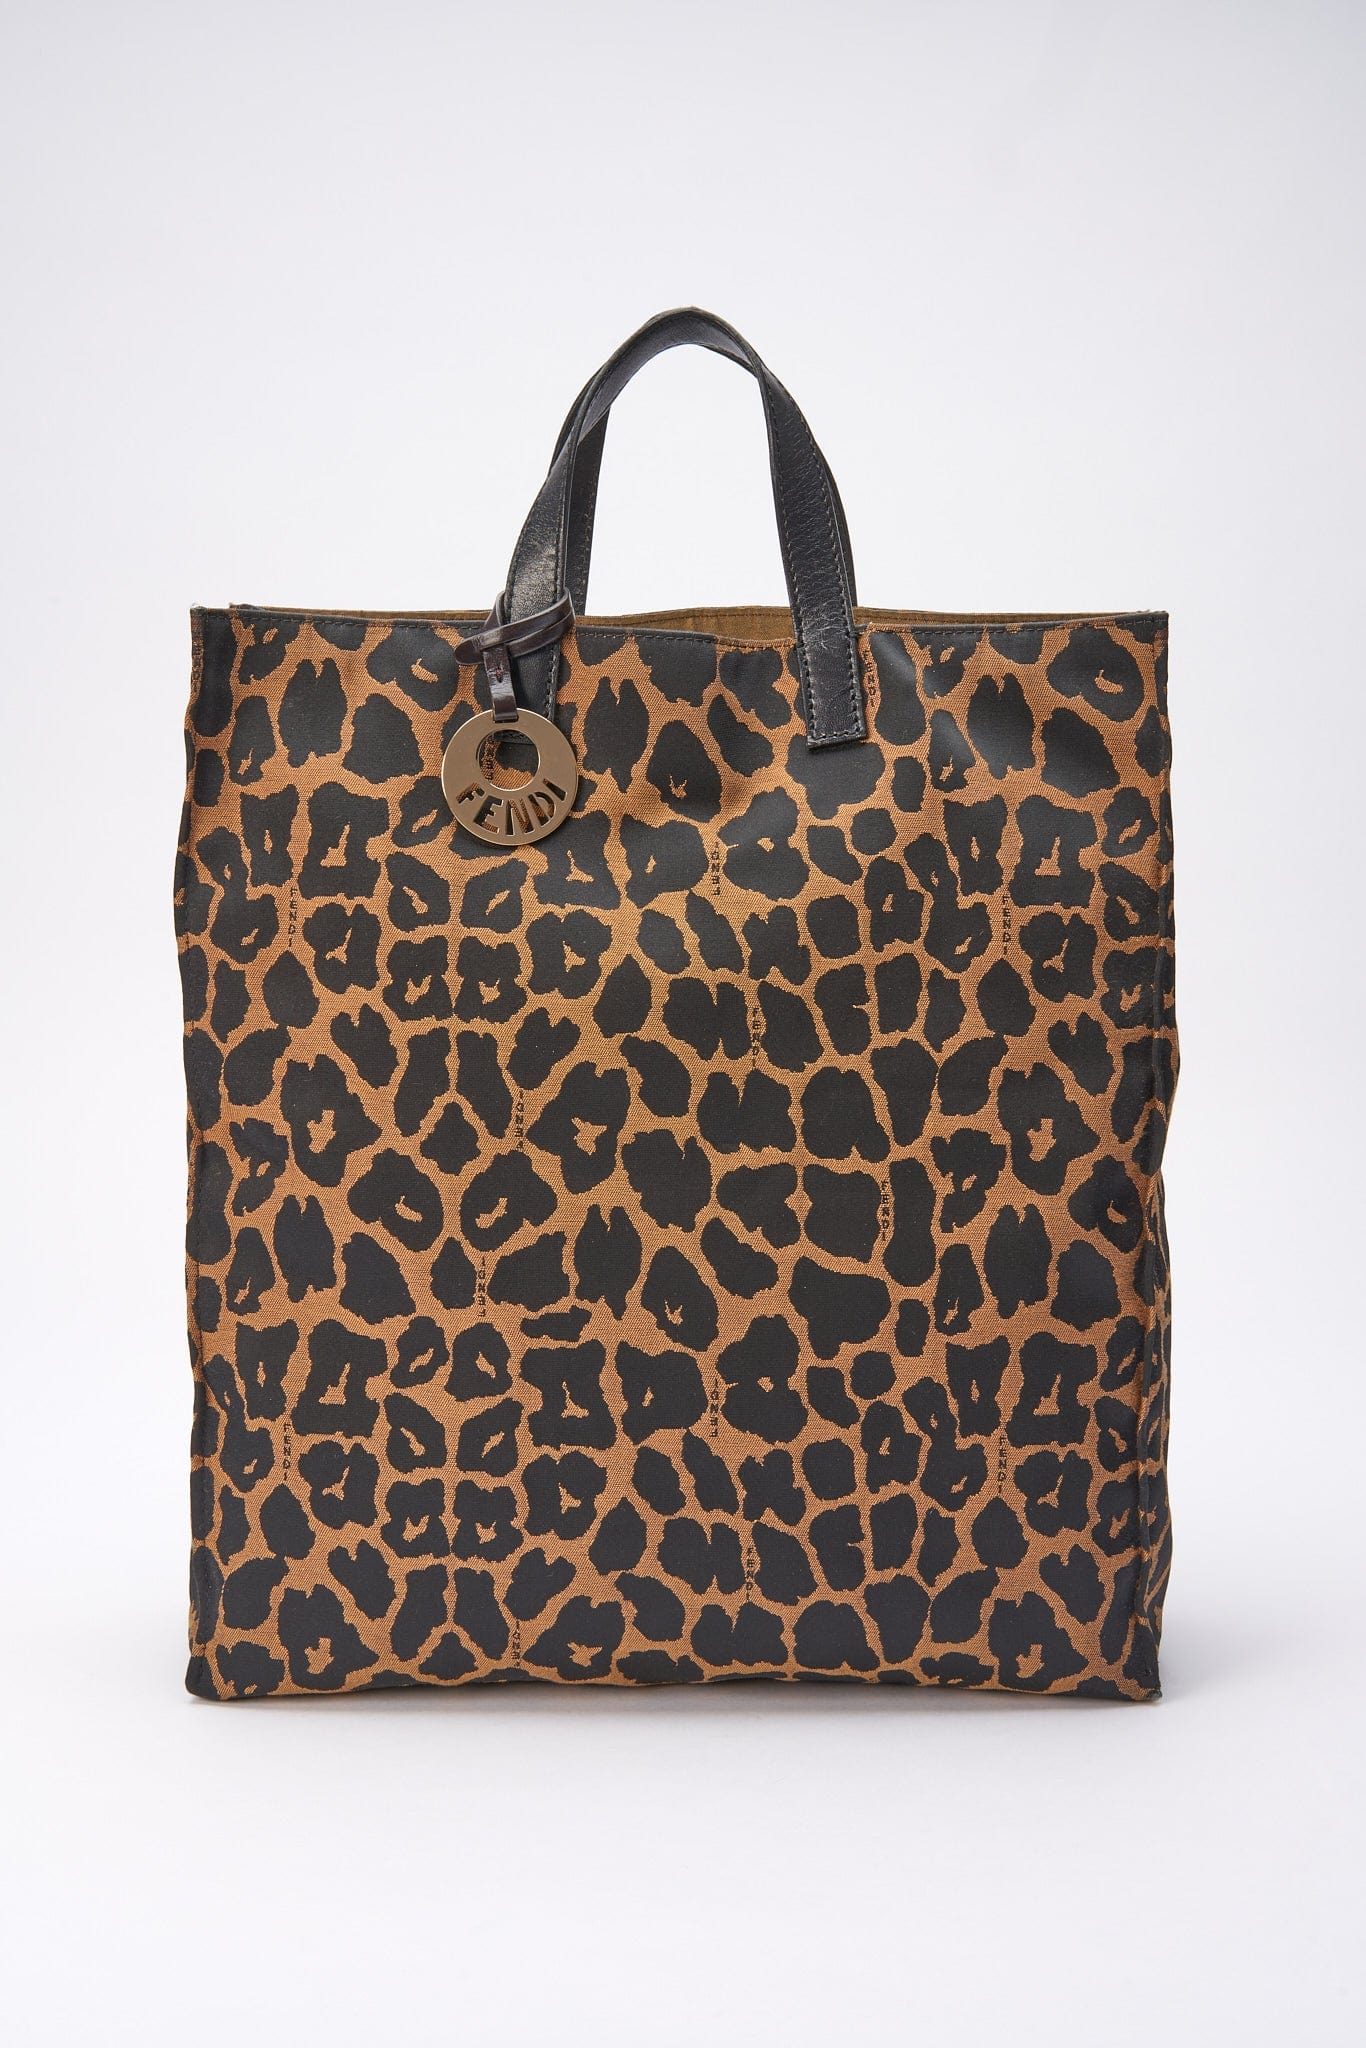 Vintage Fendi Leopard Print Tote Bag with Charm